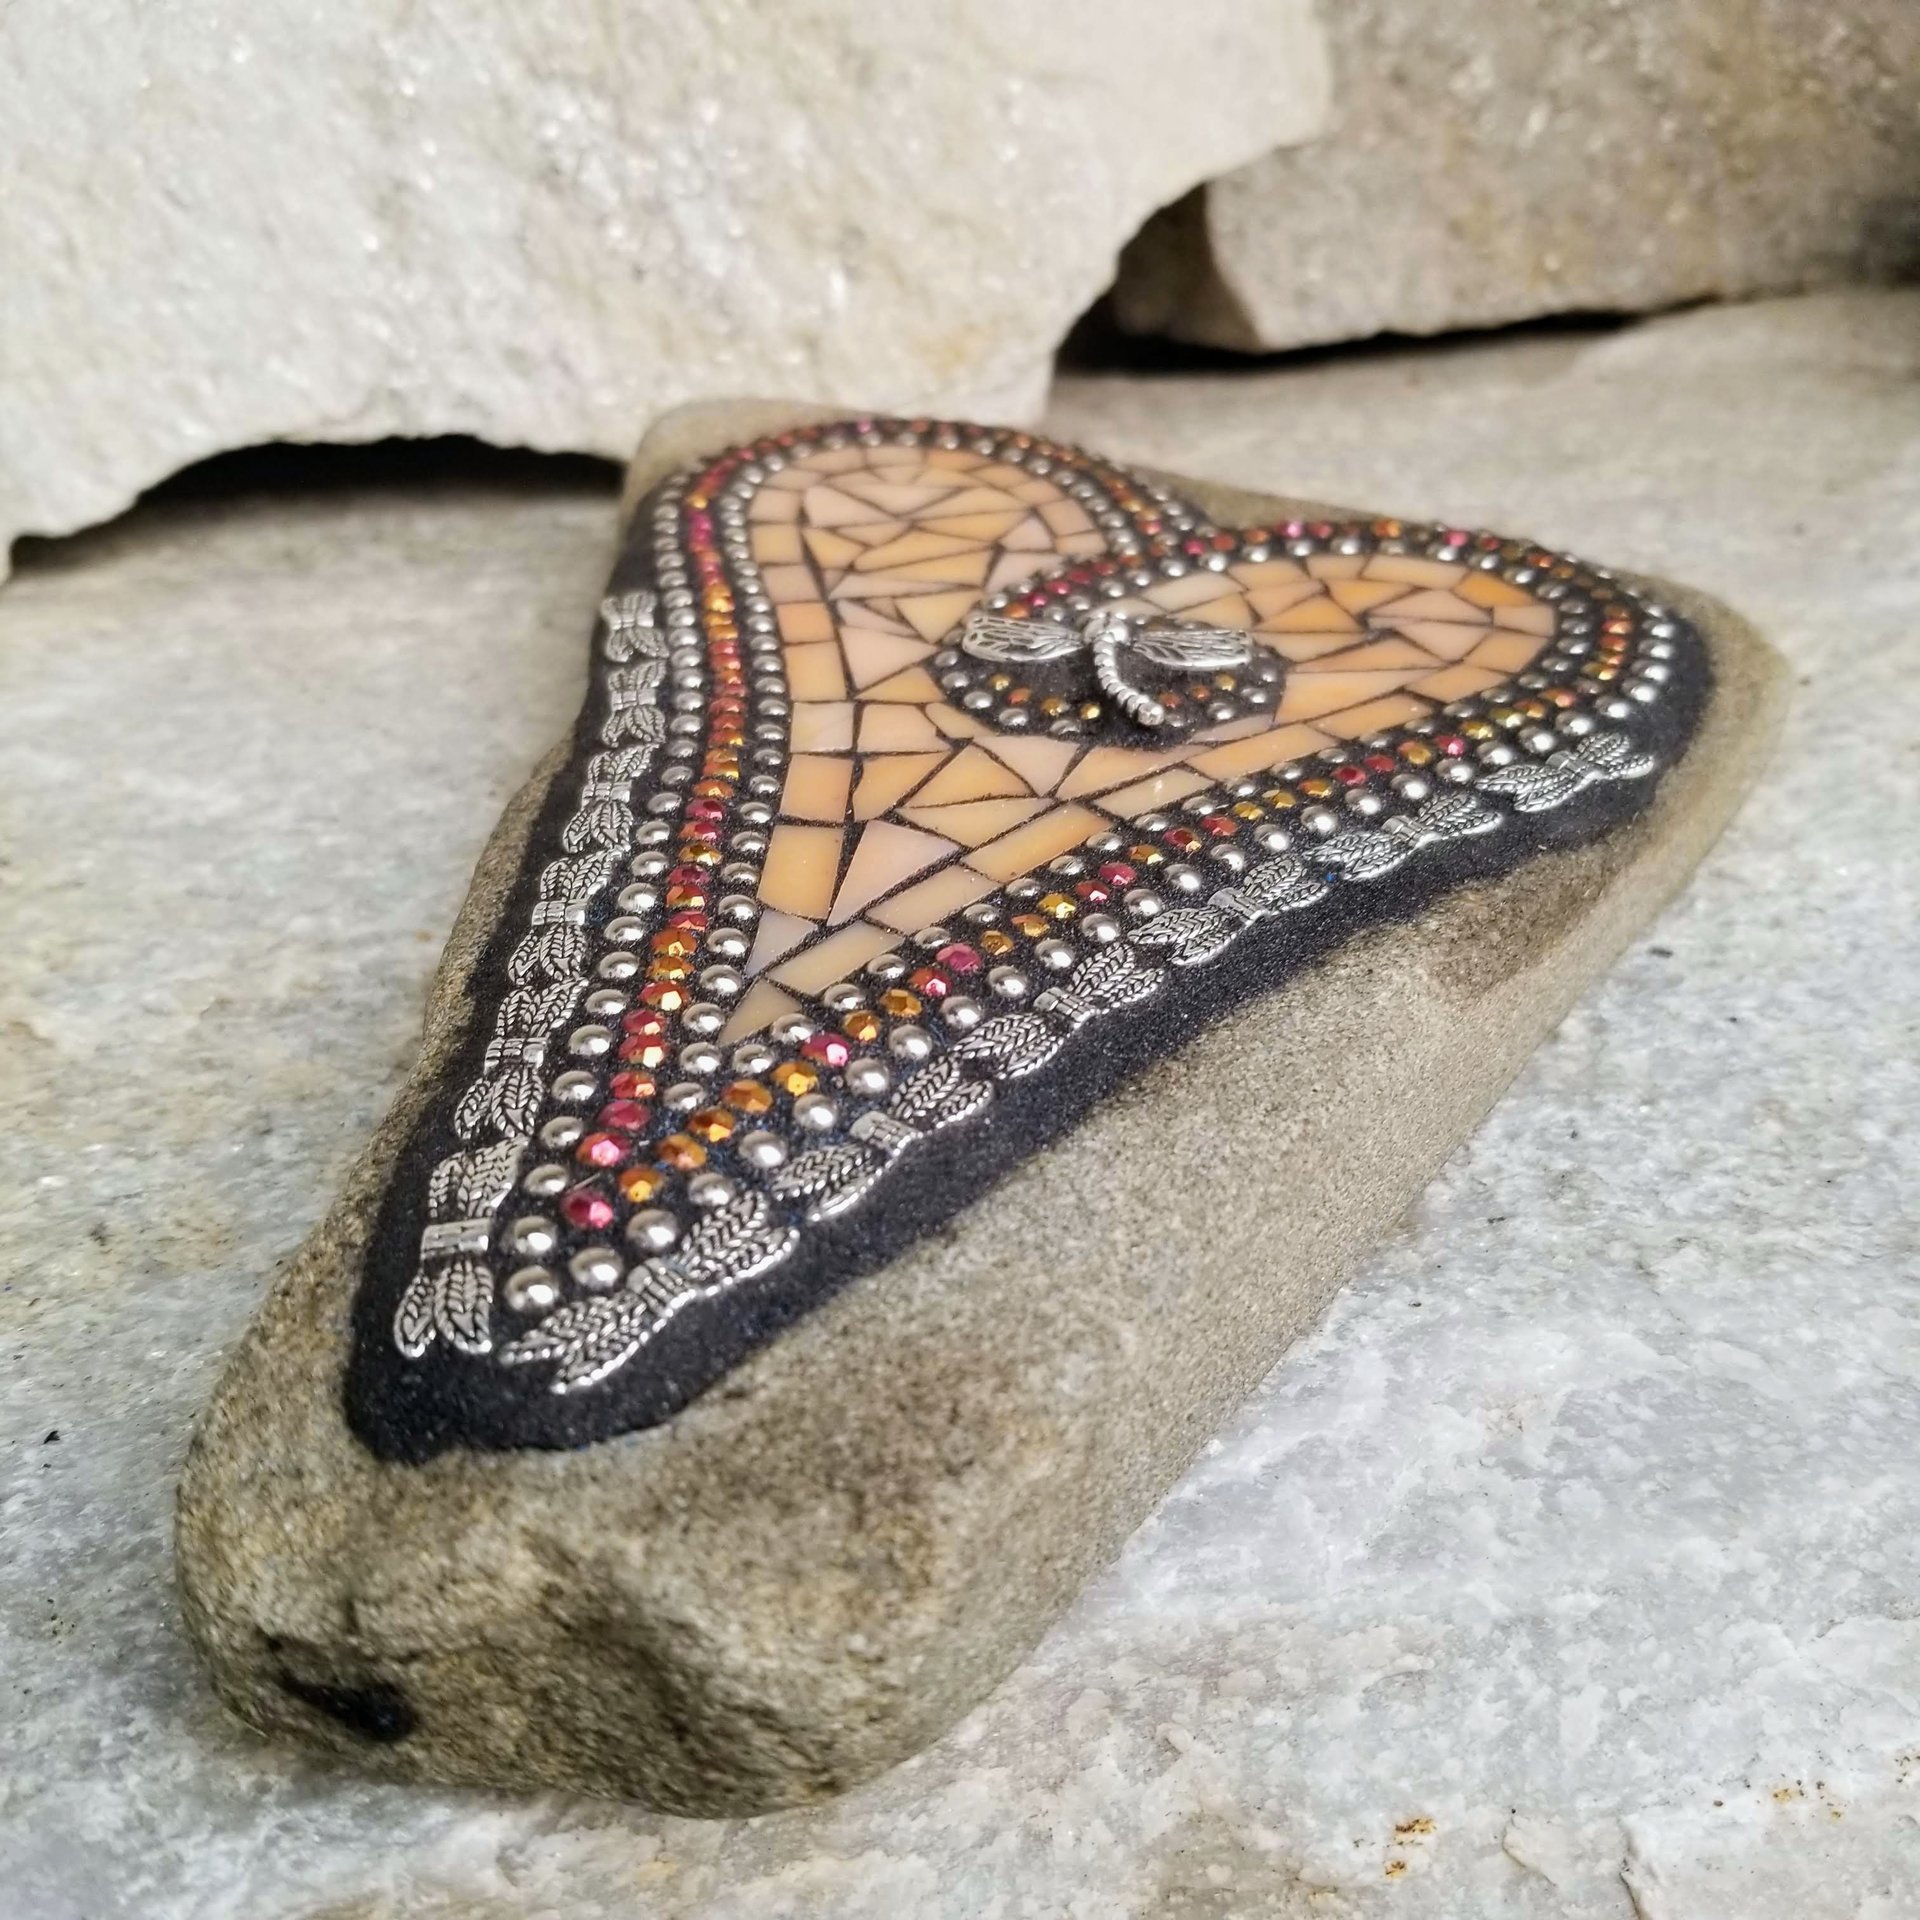 Orange Mosaic Heart Garden Stone with Dragonfly